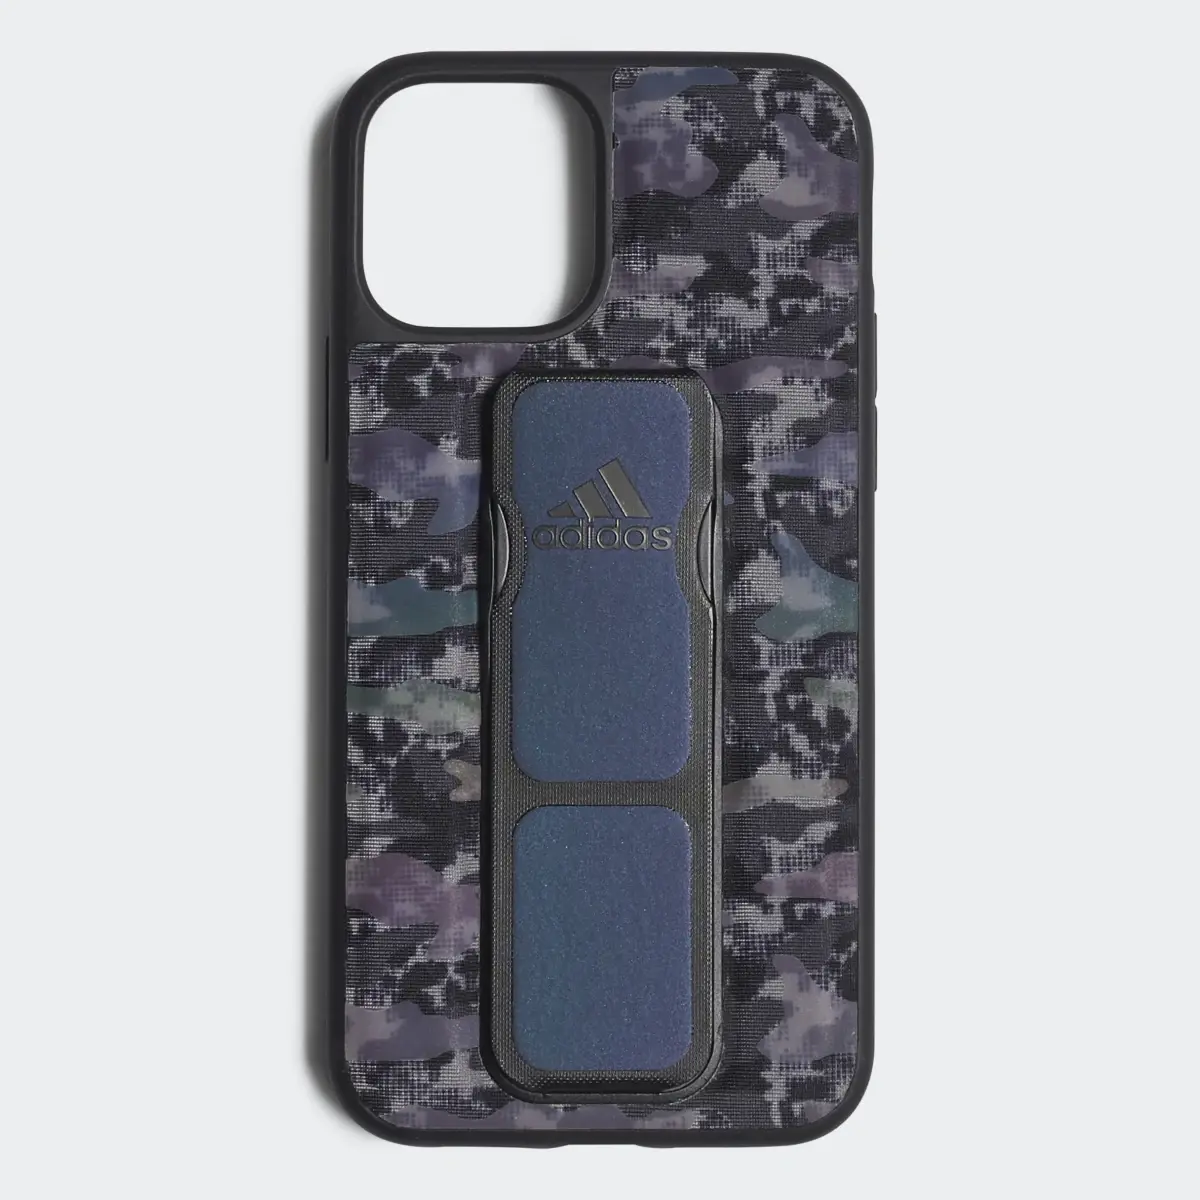 Adidas Grip Case iPhone 2020 6.1 Inch. 2